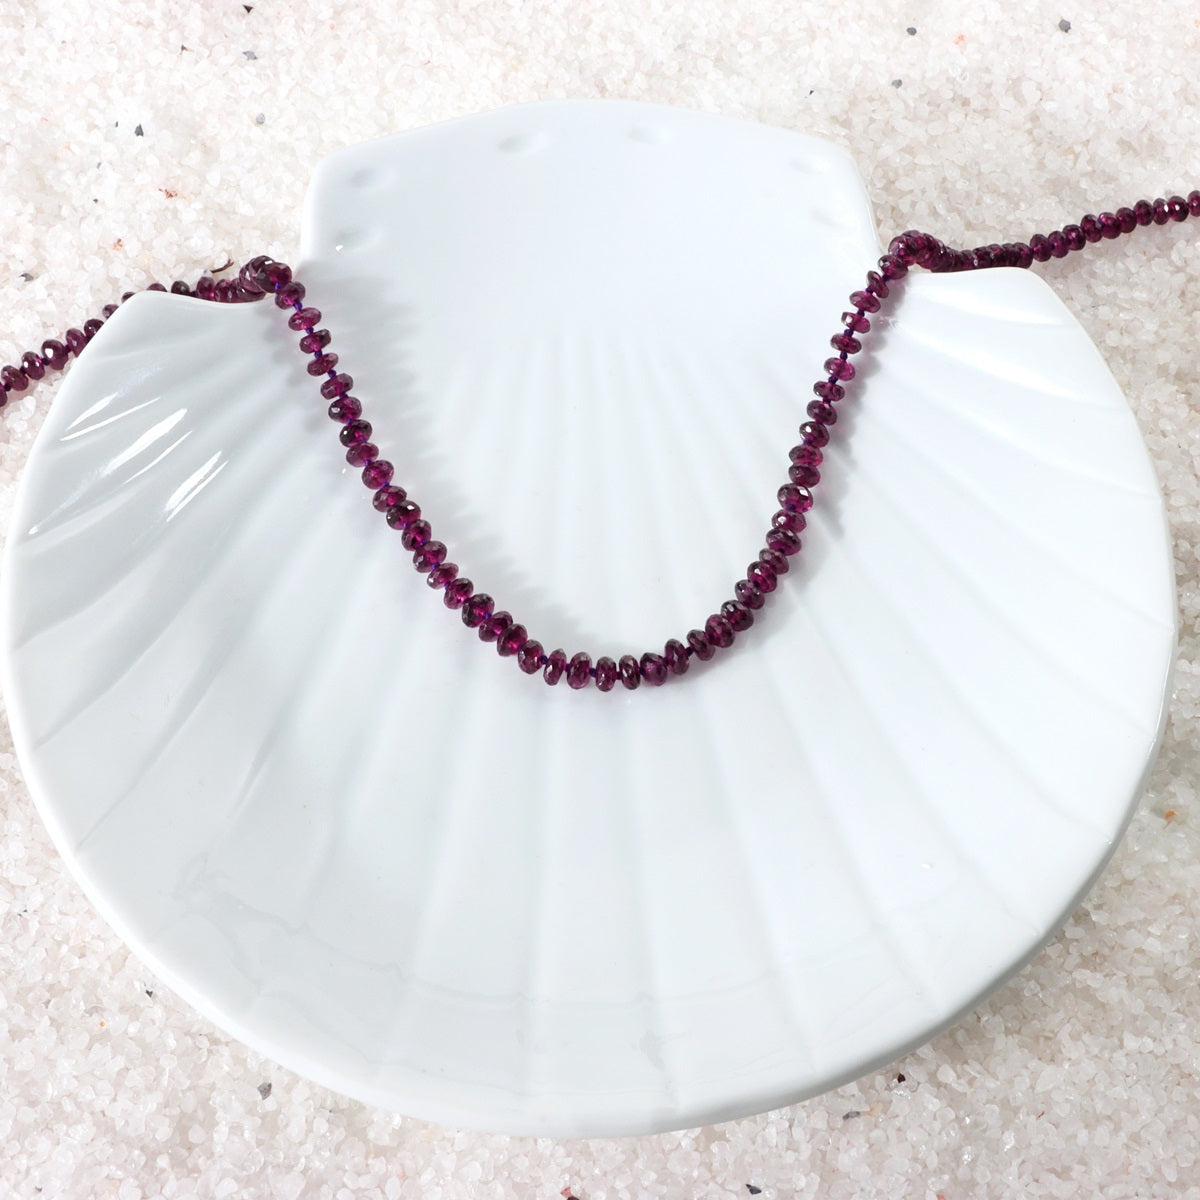 Threaded Purple Garnet Gemstone Necklace for timeless beauty